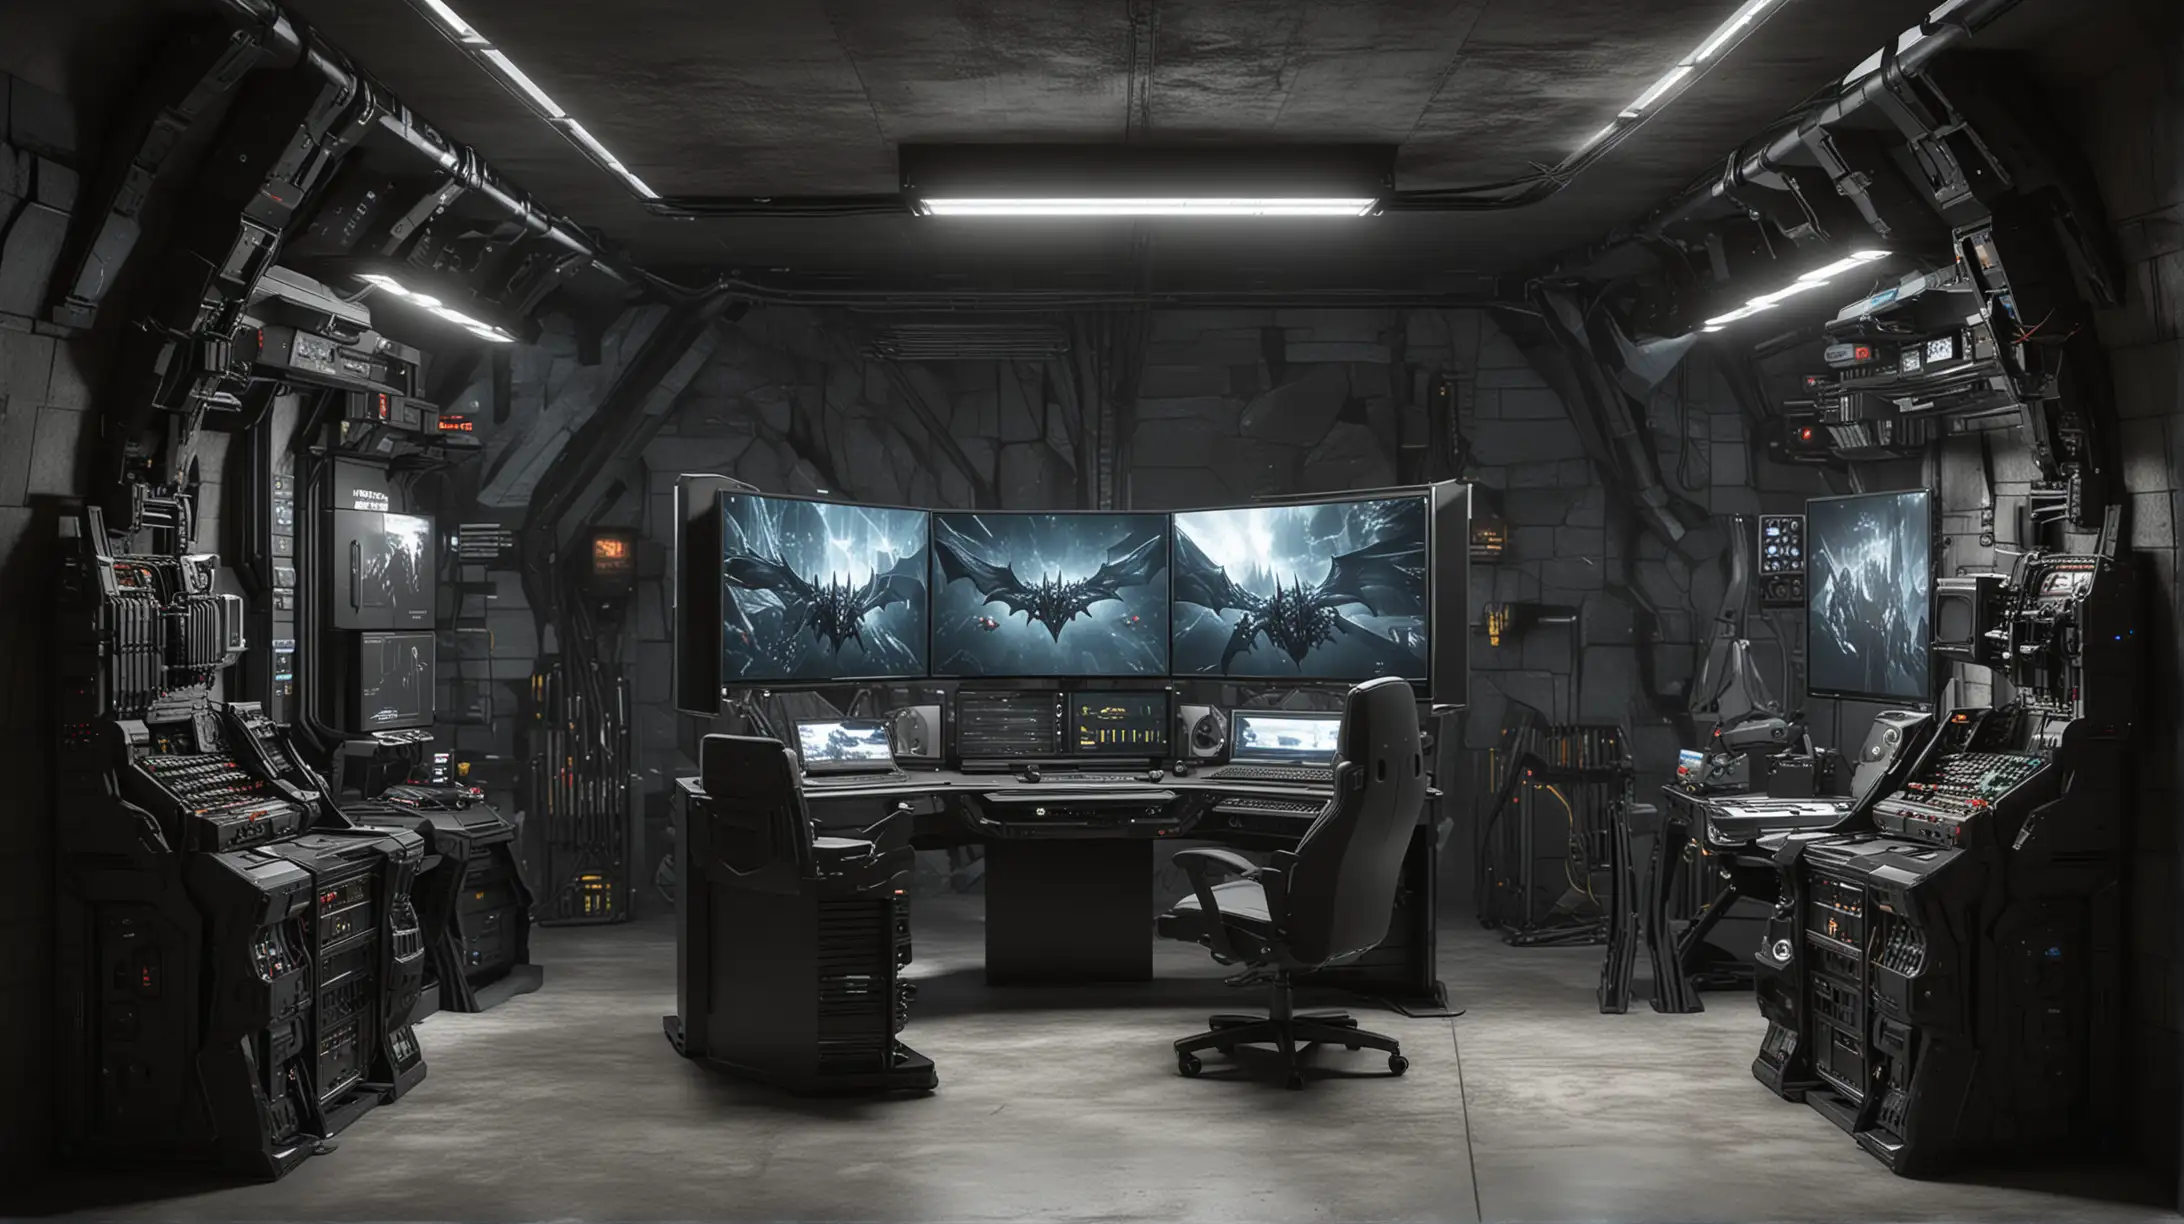 Super Elaborate BatcomputerInspired Gaming Desk Setup in MediumSized Batcave Room